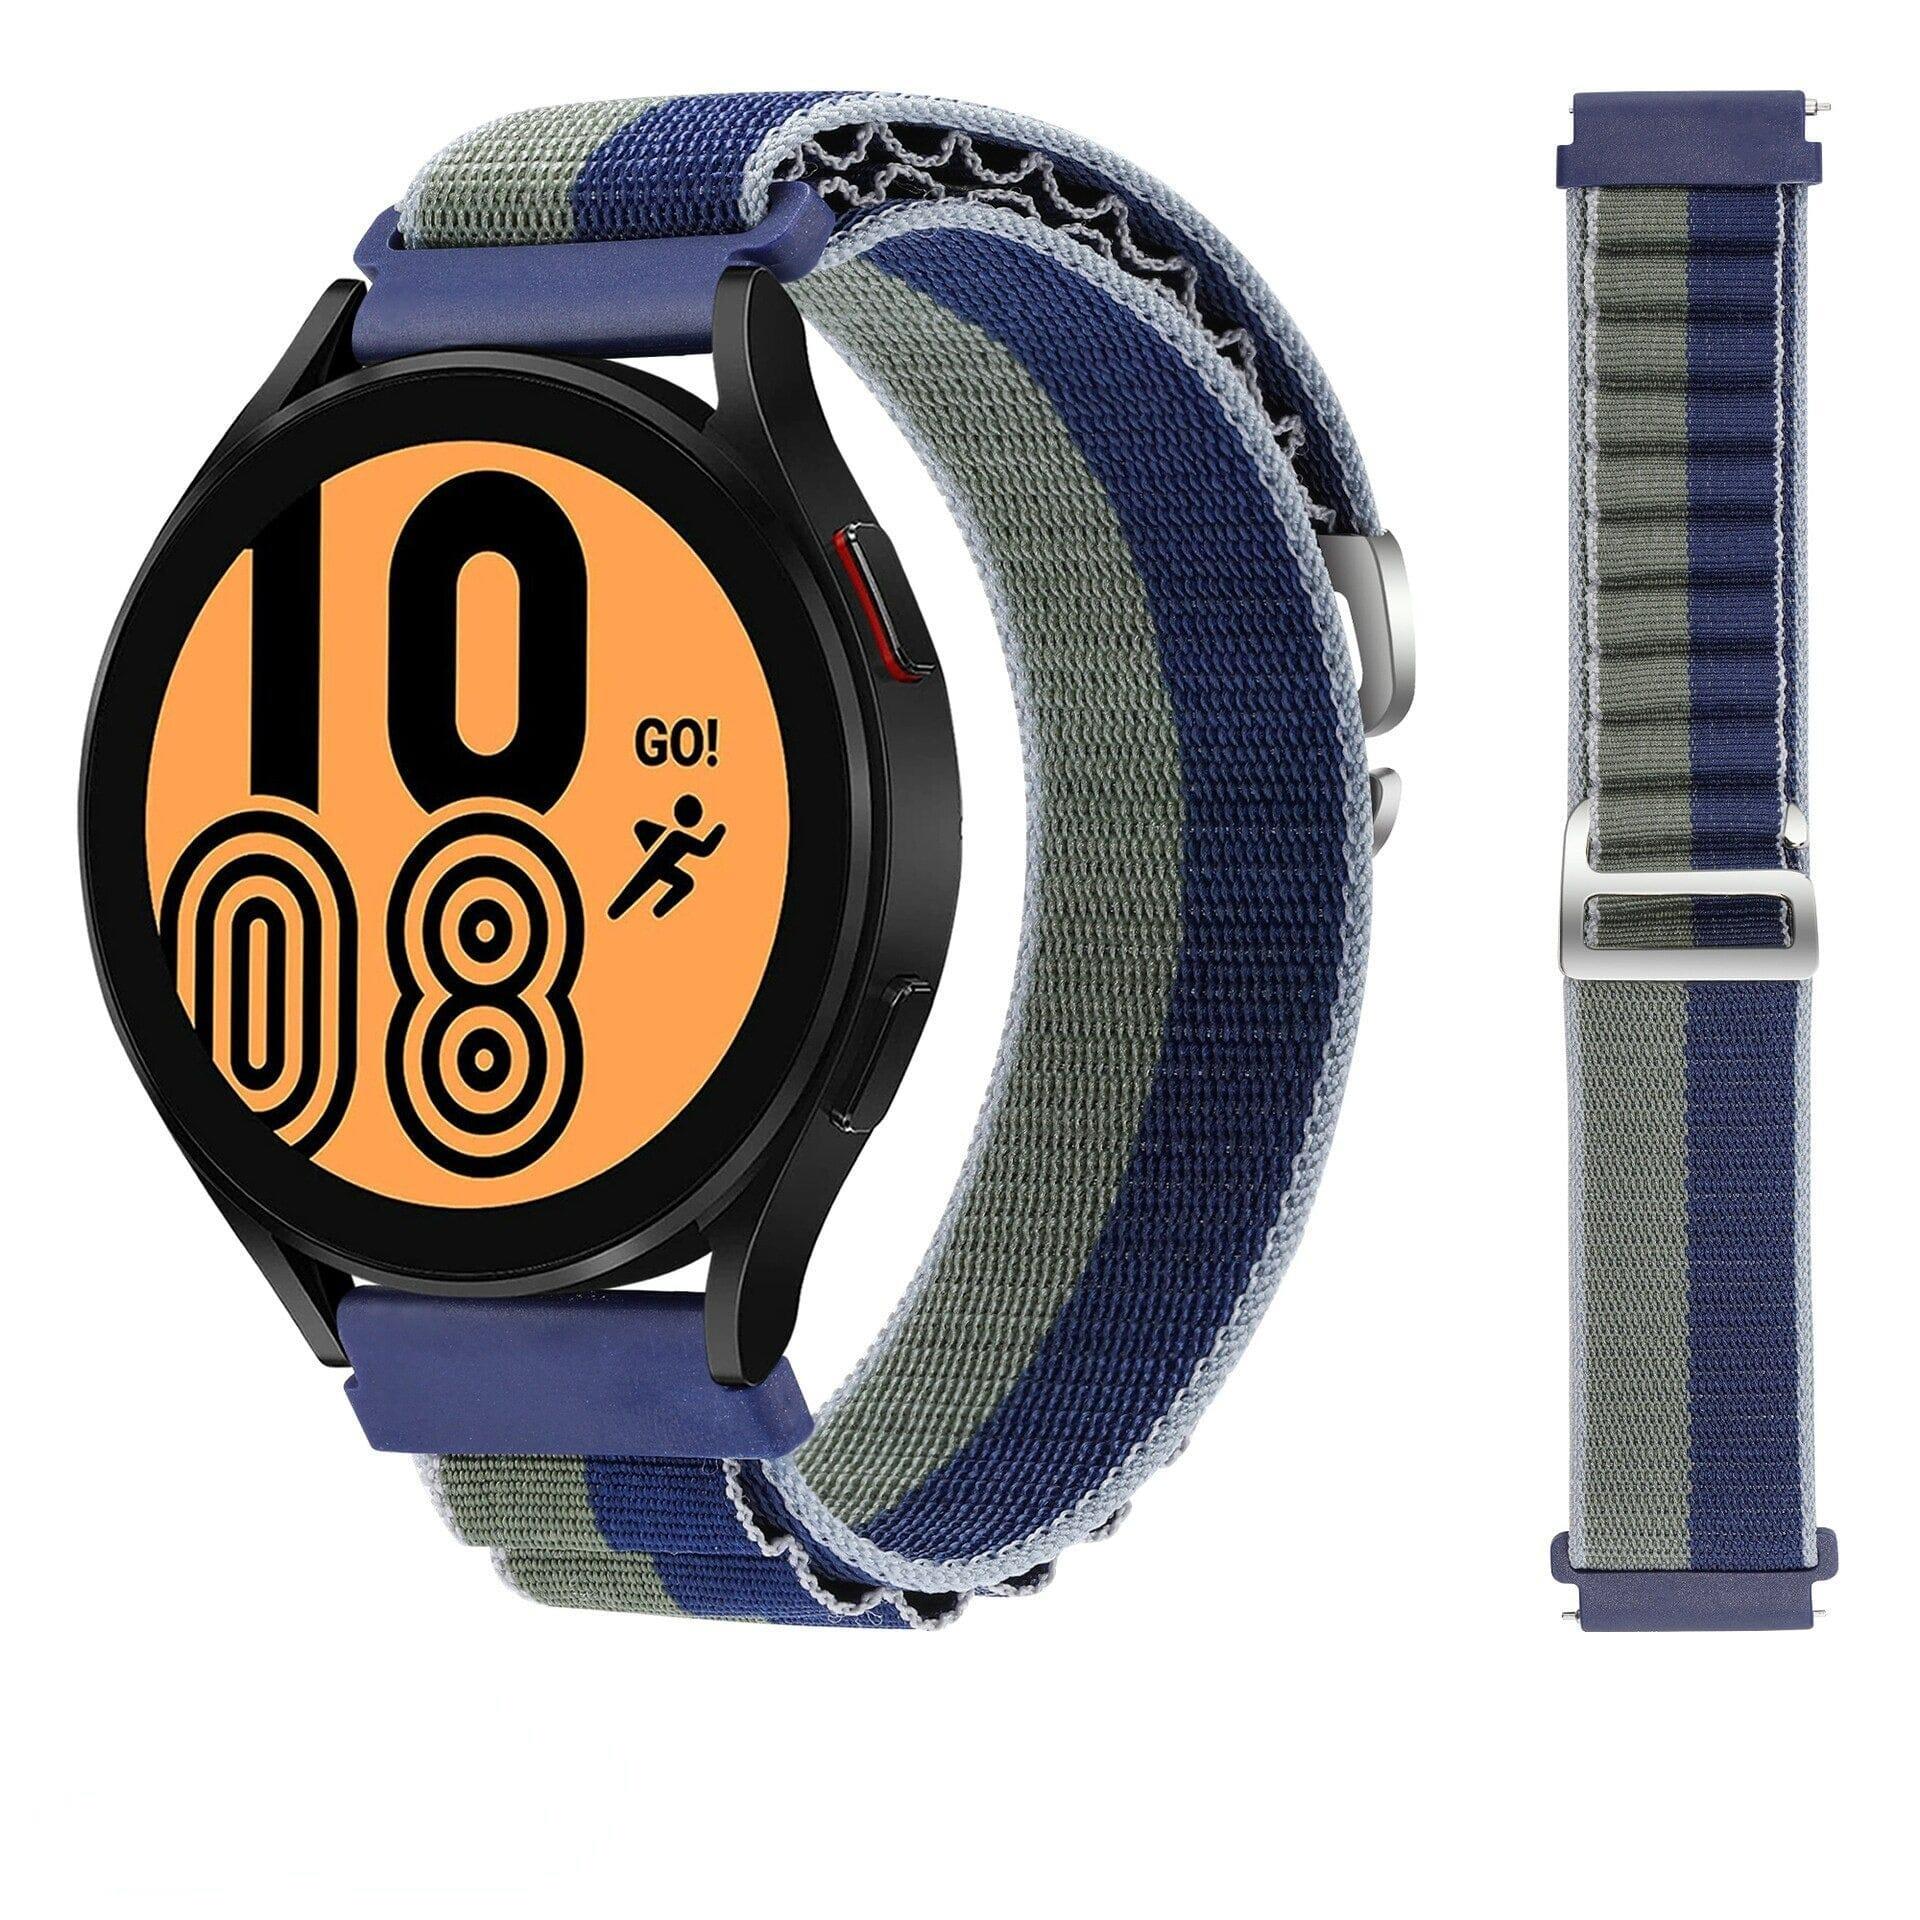 Alpine Loop Watch Straps Compatible with the Suunto 5 Peak